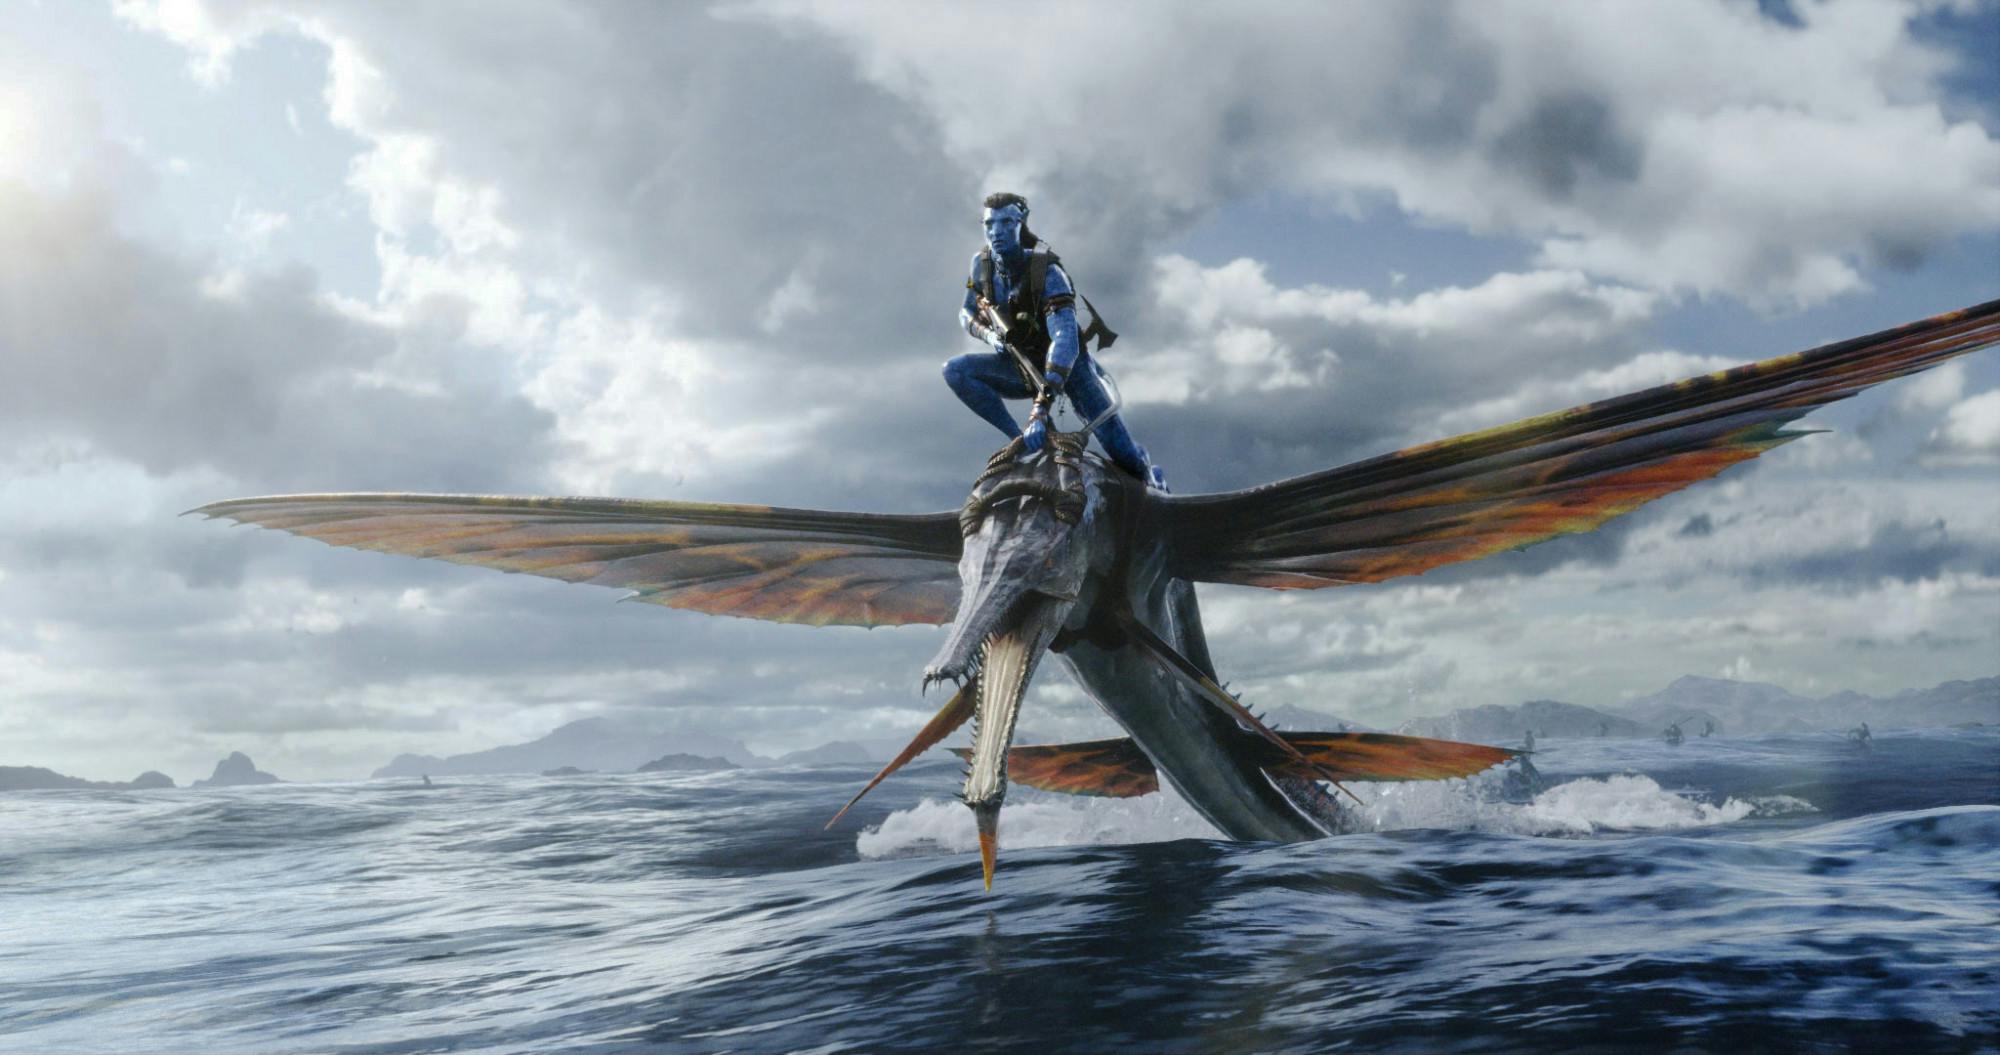 Avatar 2 Concept Art Shows A Storm On Pandora